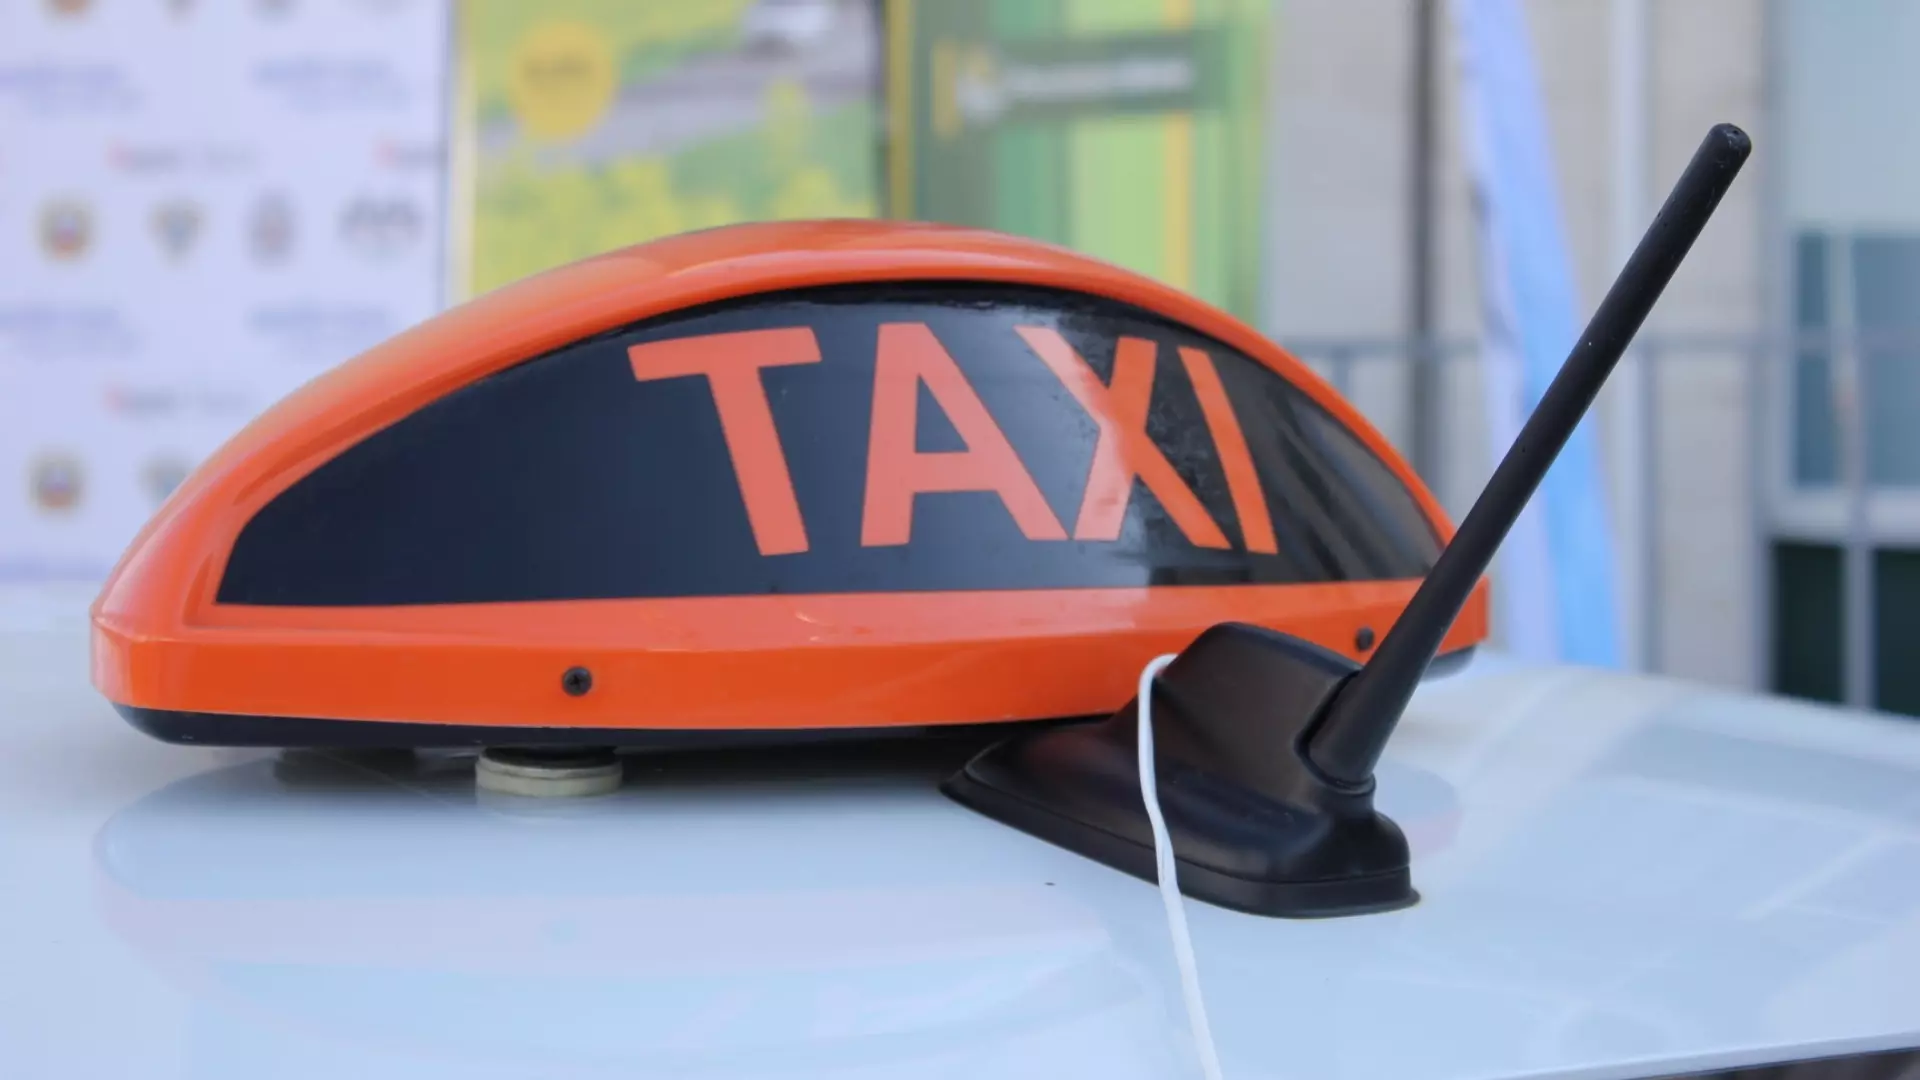 Цены на такси могут вырасти до конца года на 10-100% — СМИ